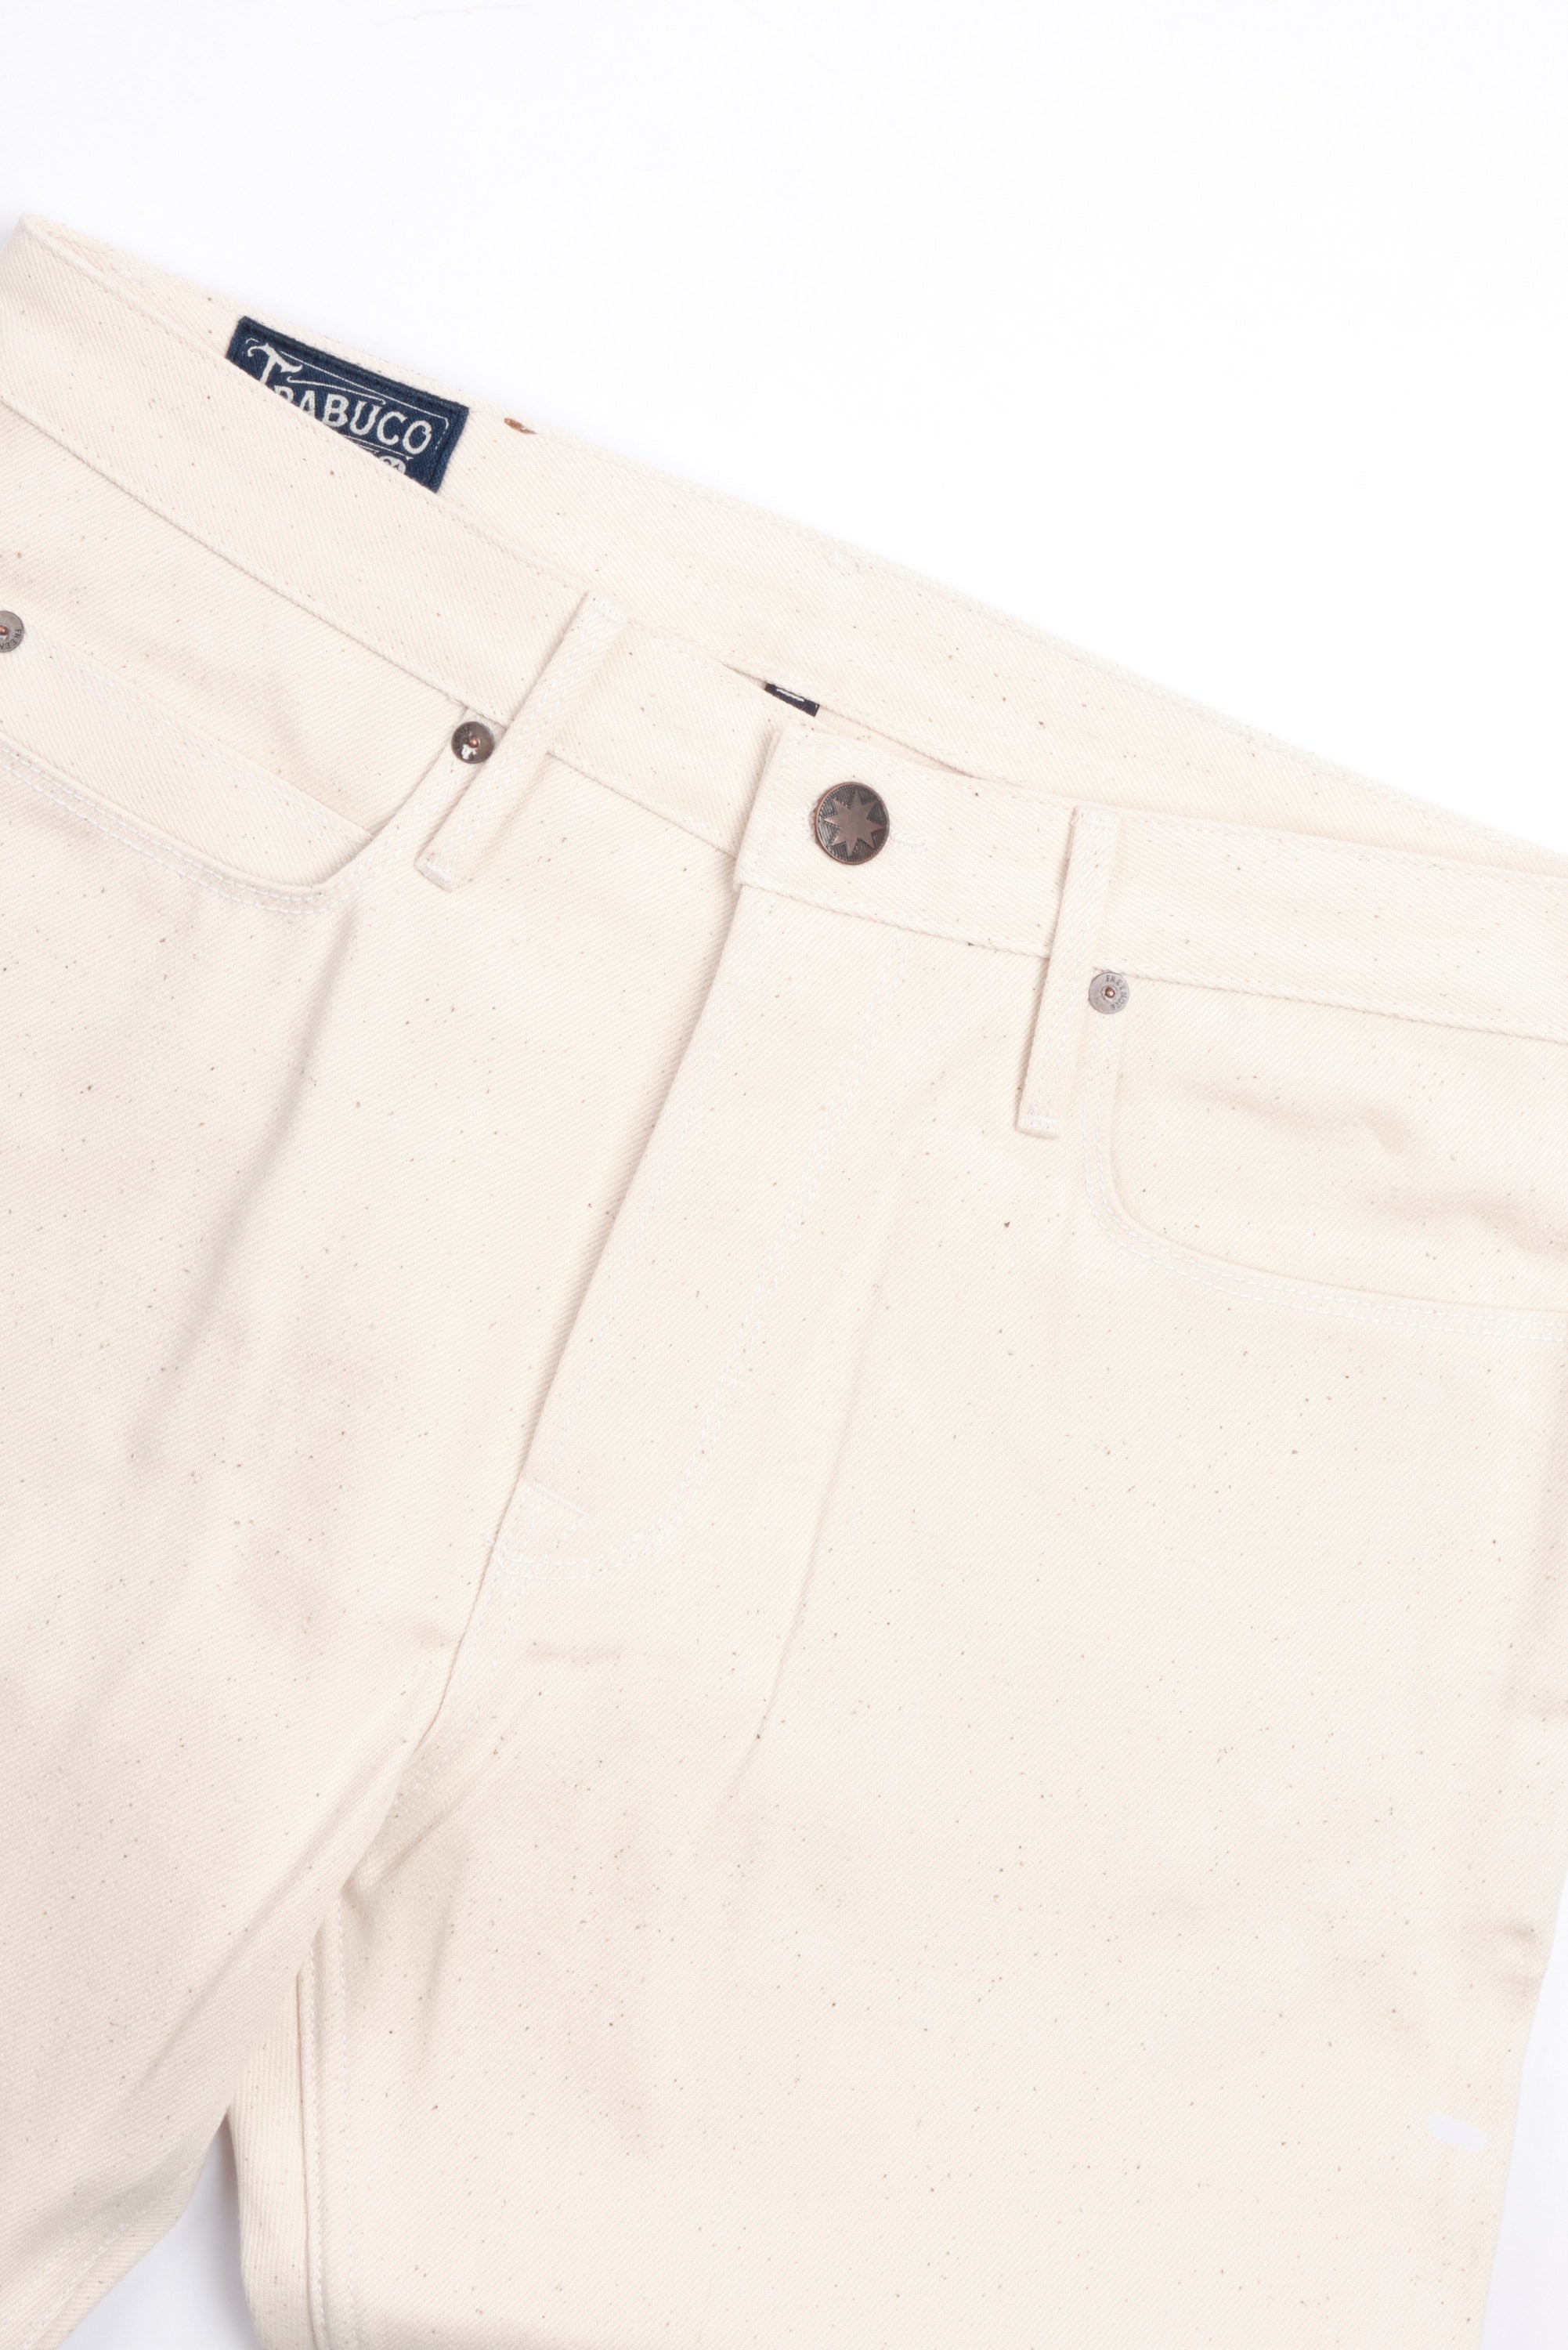 Rekucci Jeans - White - Size 12